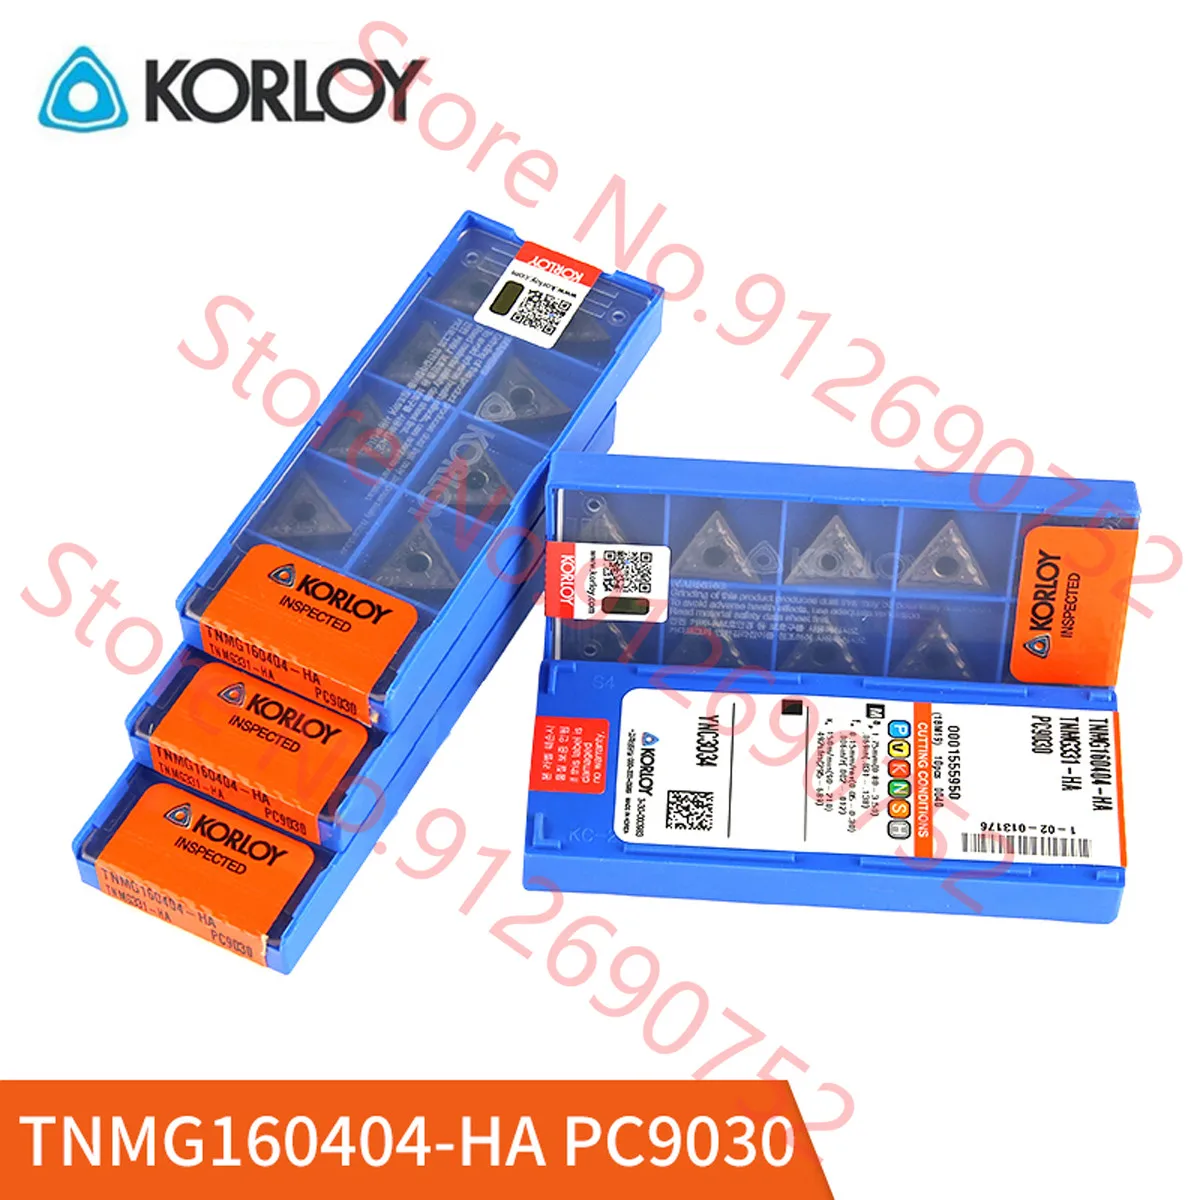 TNMG160404-HA/TNMG160408-HA H01 NC3120 PC9030 PC5300 KORLOY KARBIID SISESTA 10PCS/BOX 4